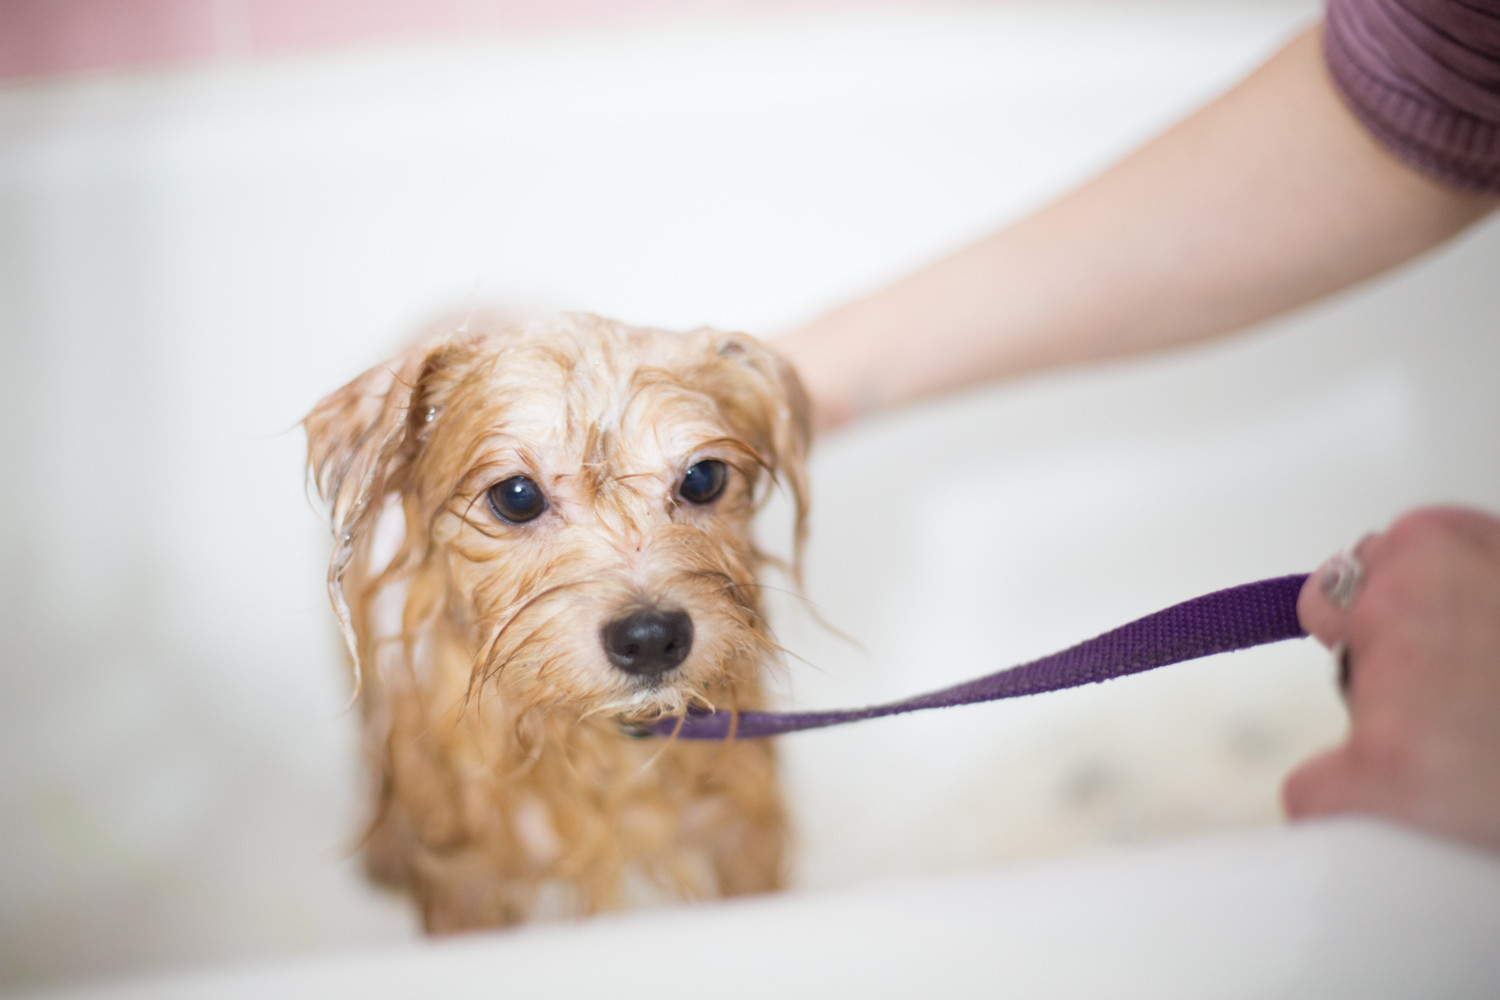 Small wet dog in a bath